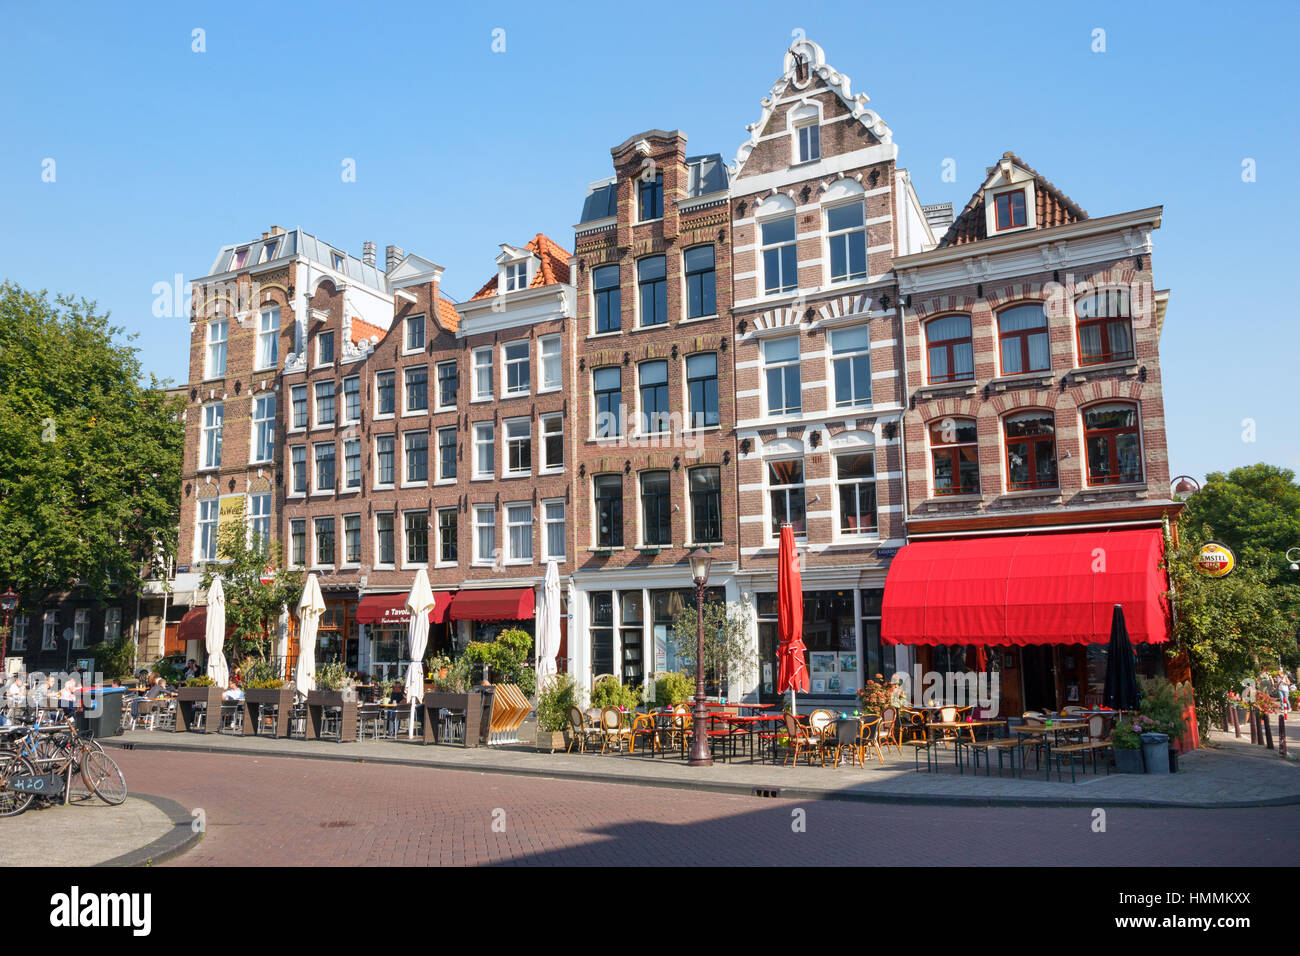 AMSTERDAM - AUG 27, 2014: Restaurants in typical canal houses on the Kadijksplein in Amsterdam Stock Photo